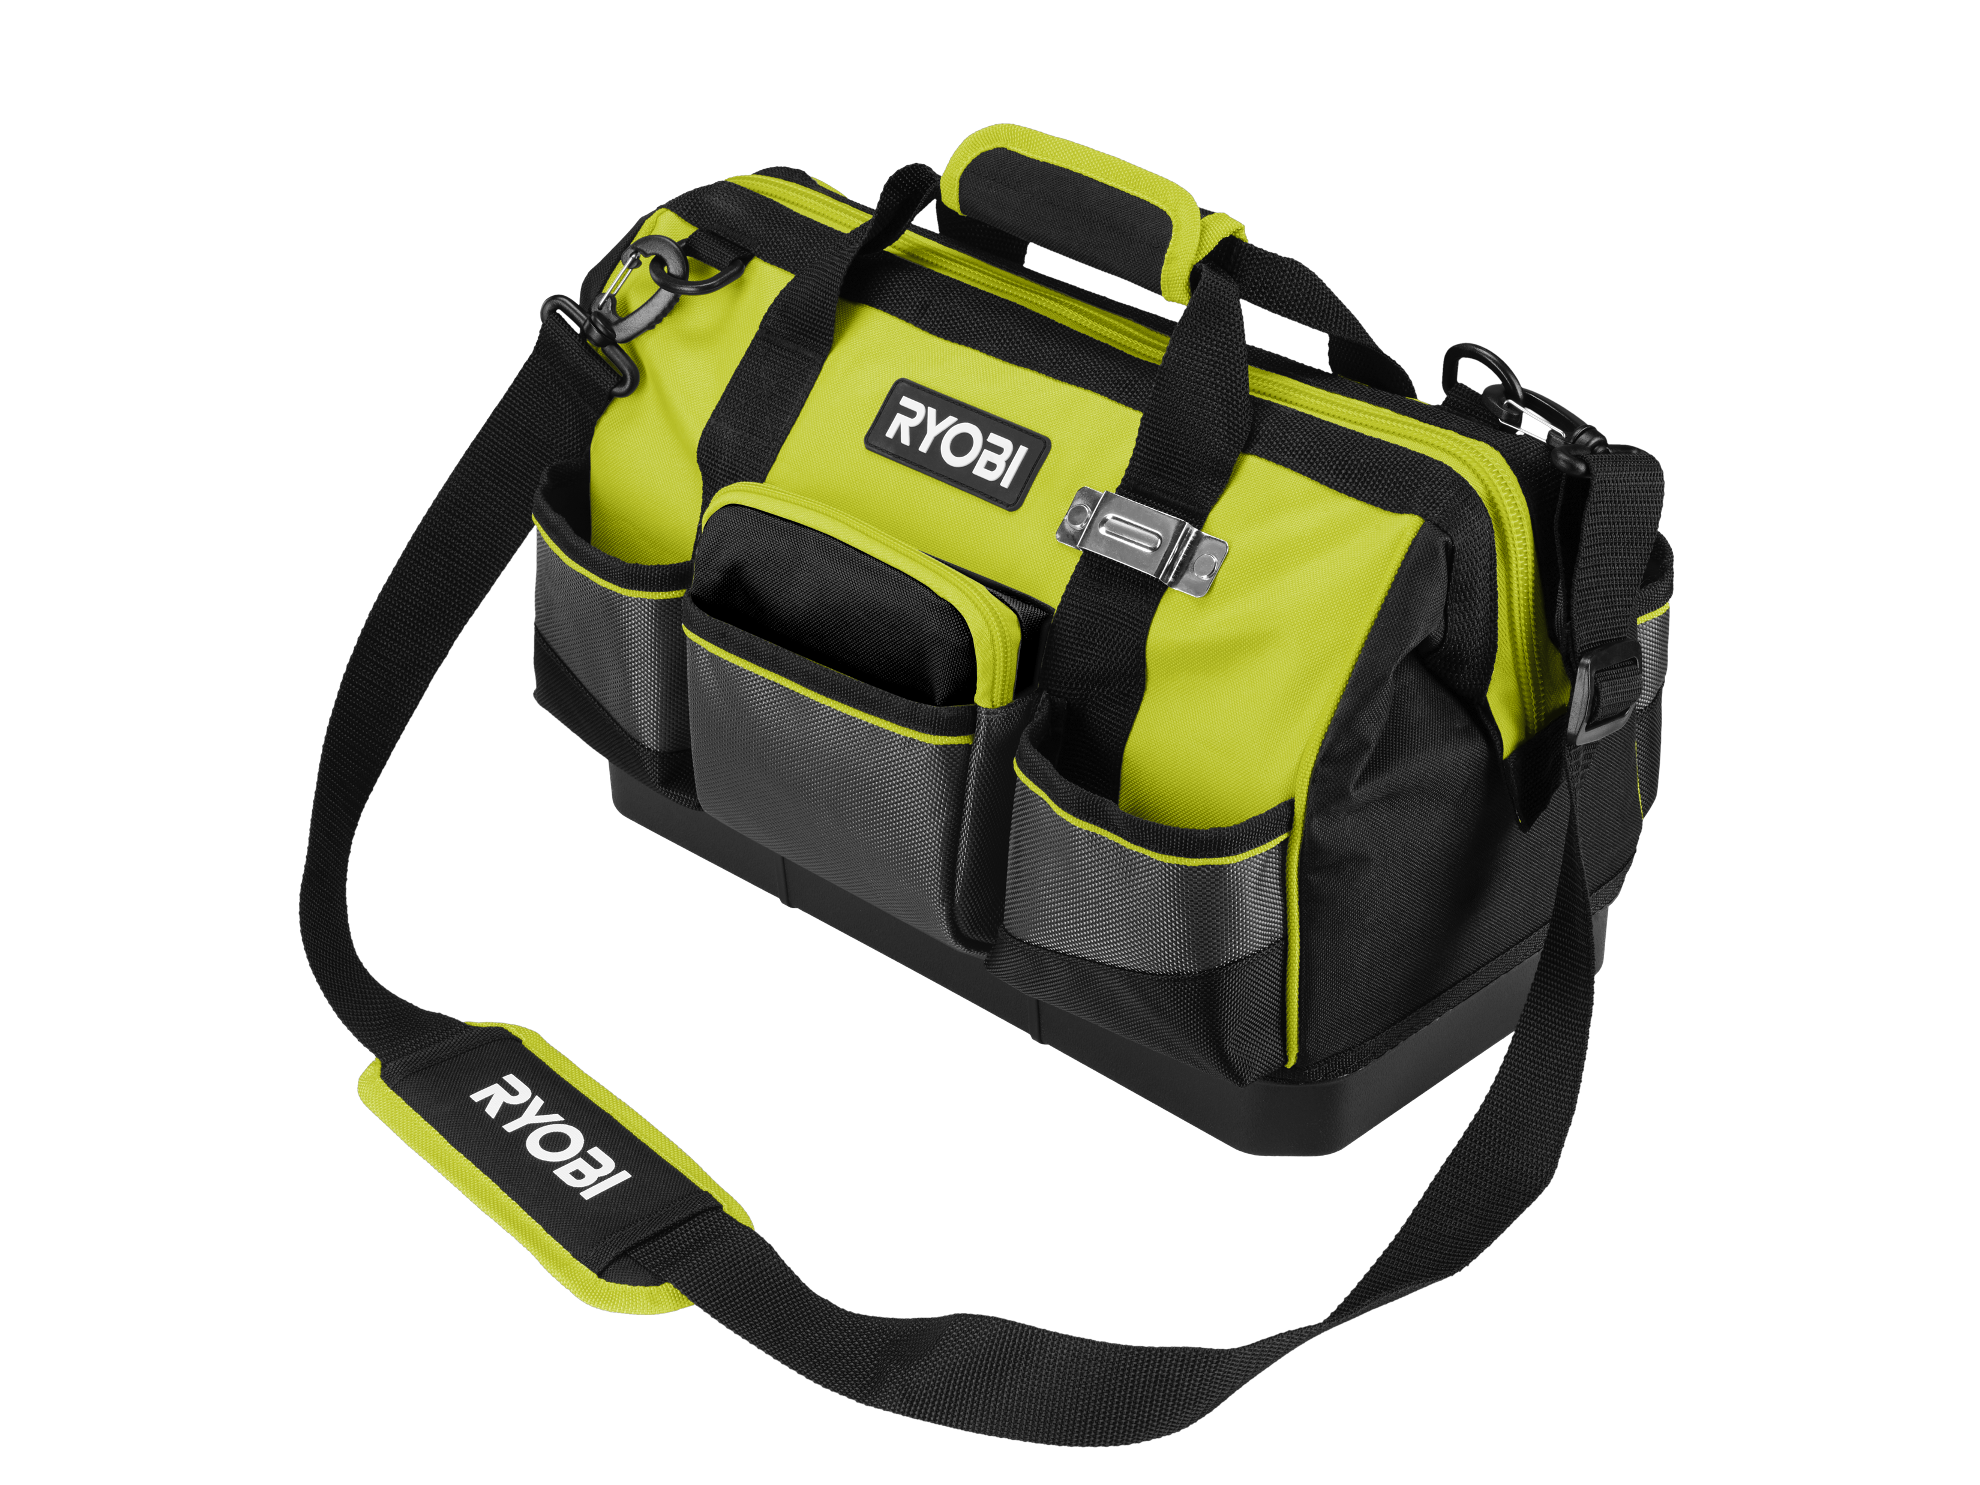 Exel Nylon Large tool bag (Duffle) 53-521 Yellow Black : Amazon.in: Home  Improvement